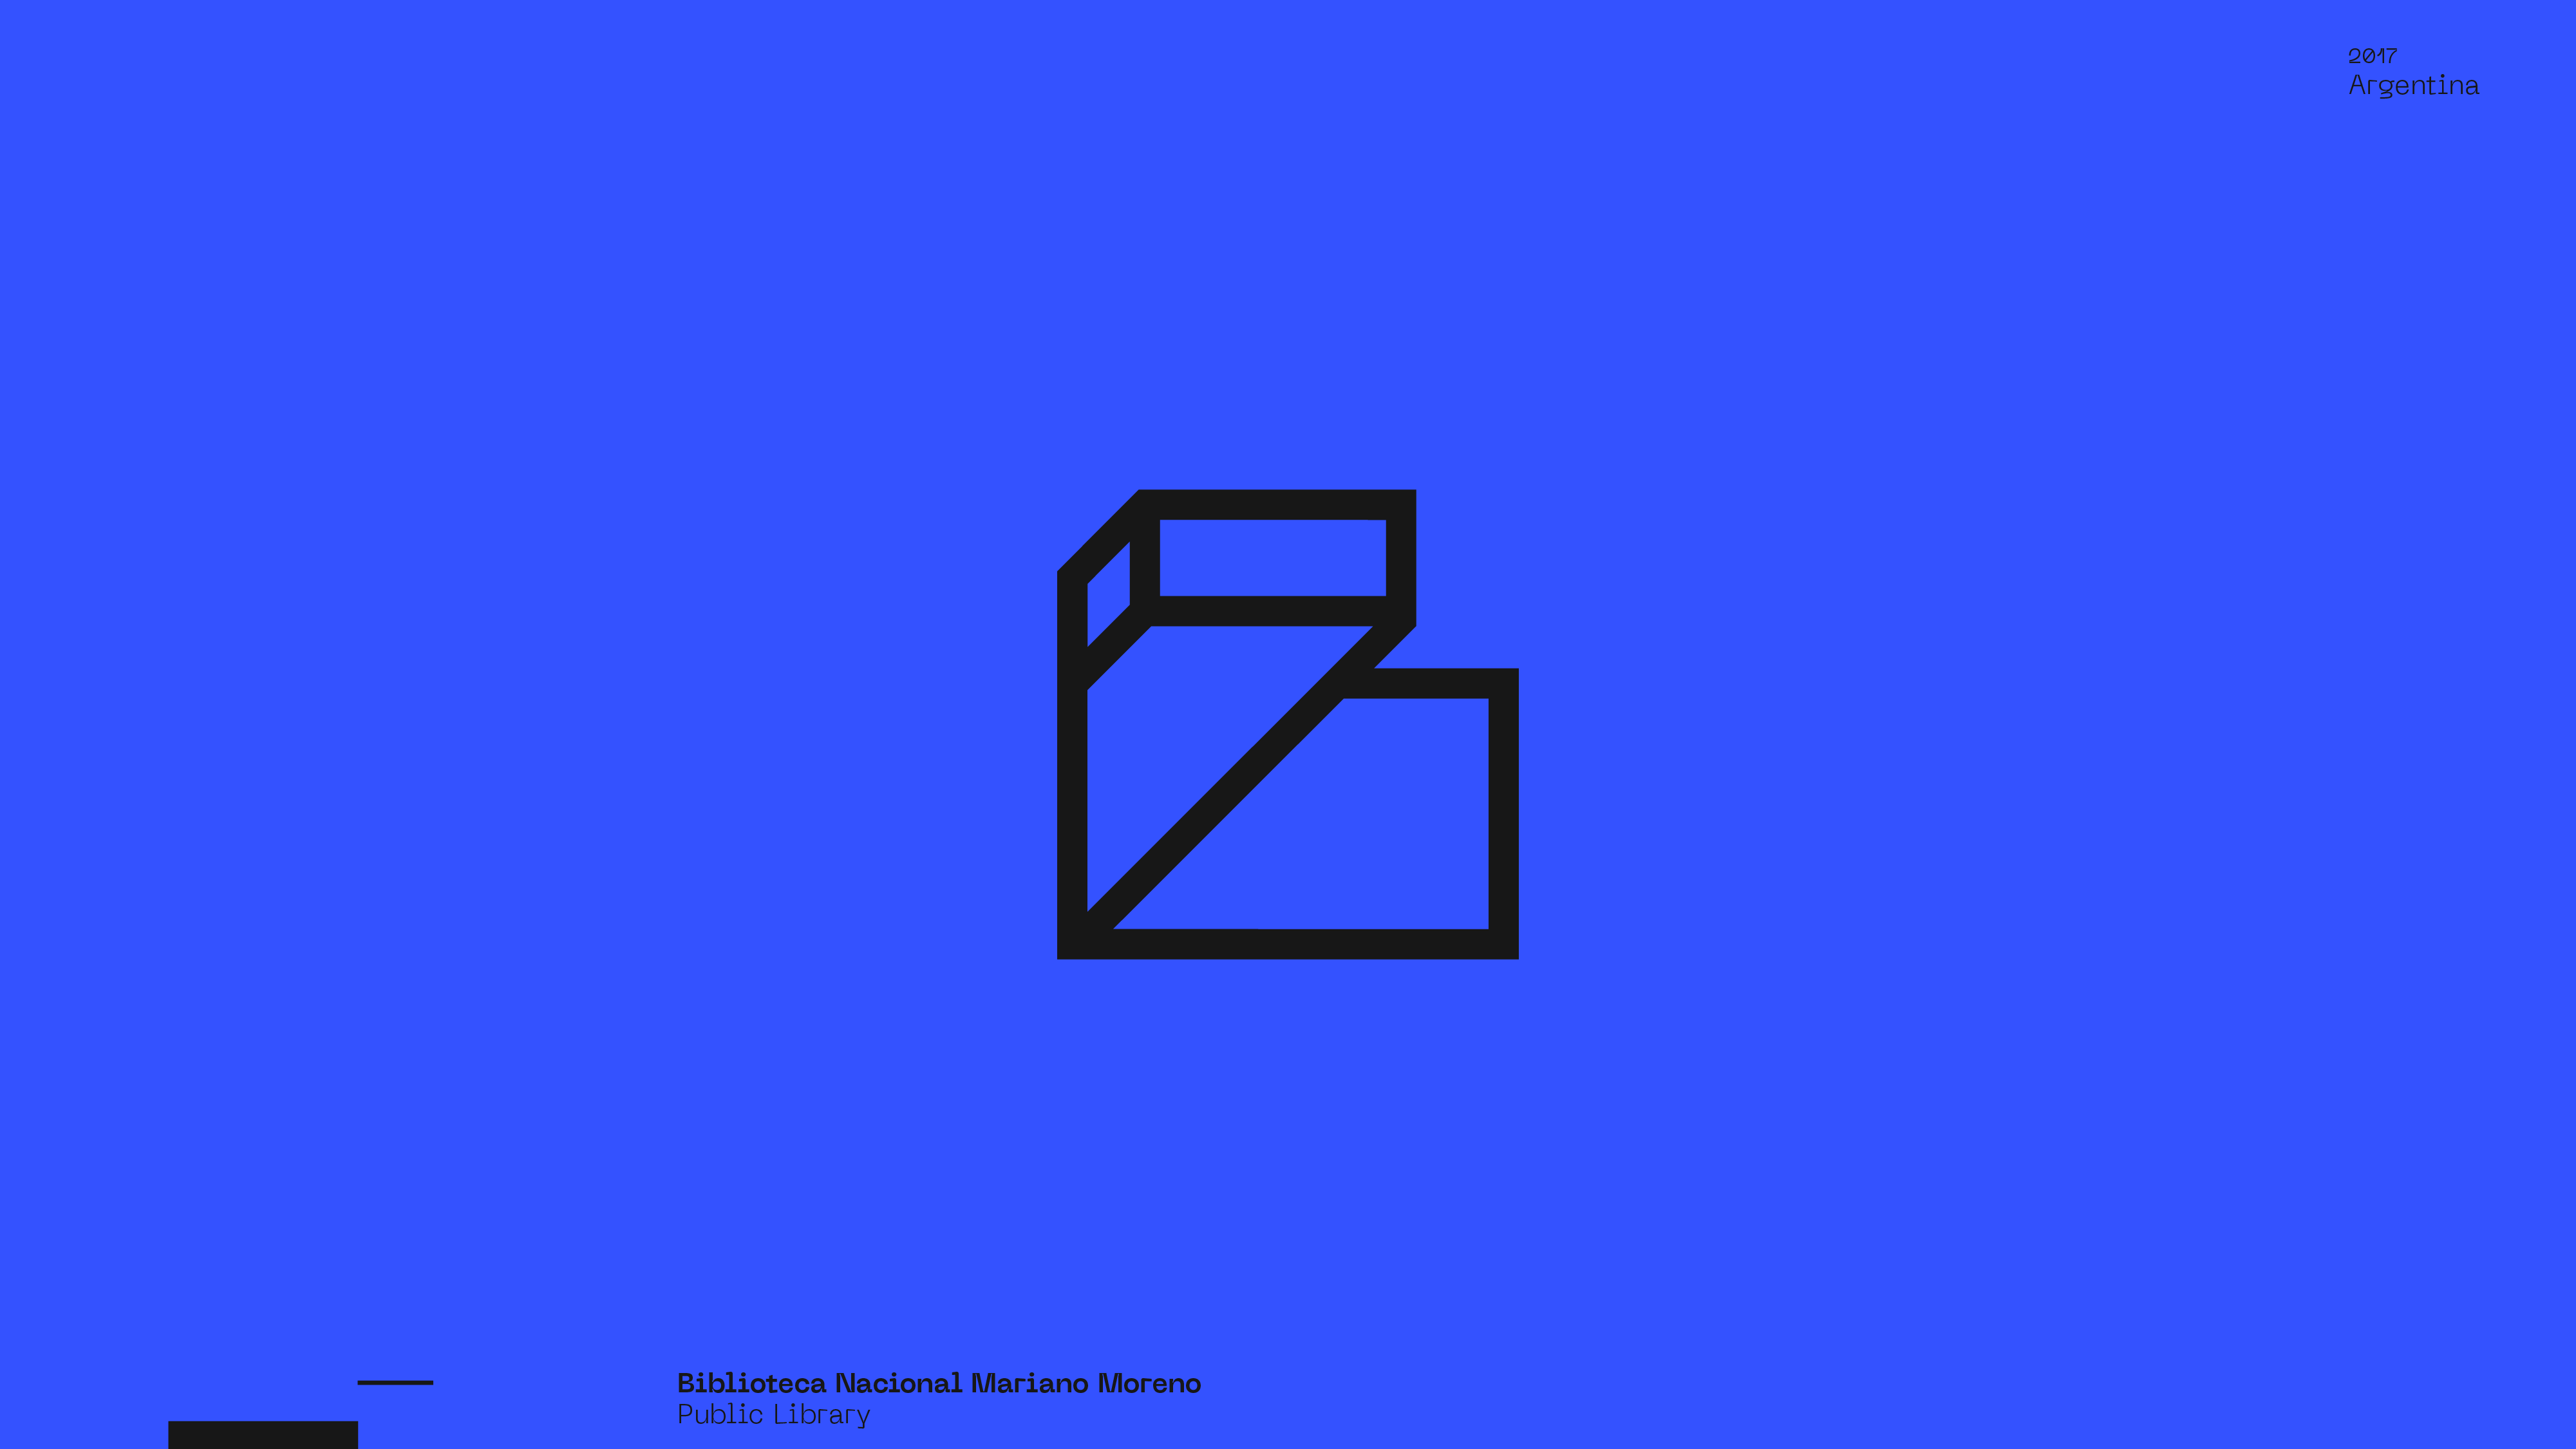 Guapo Design Studio by Esteban Ibarra Logofolio 2017 2018 logo designer — Biblioteca Nacional